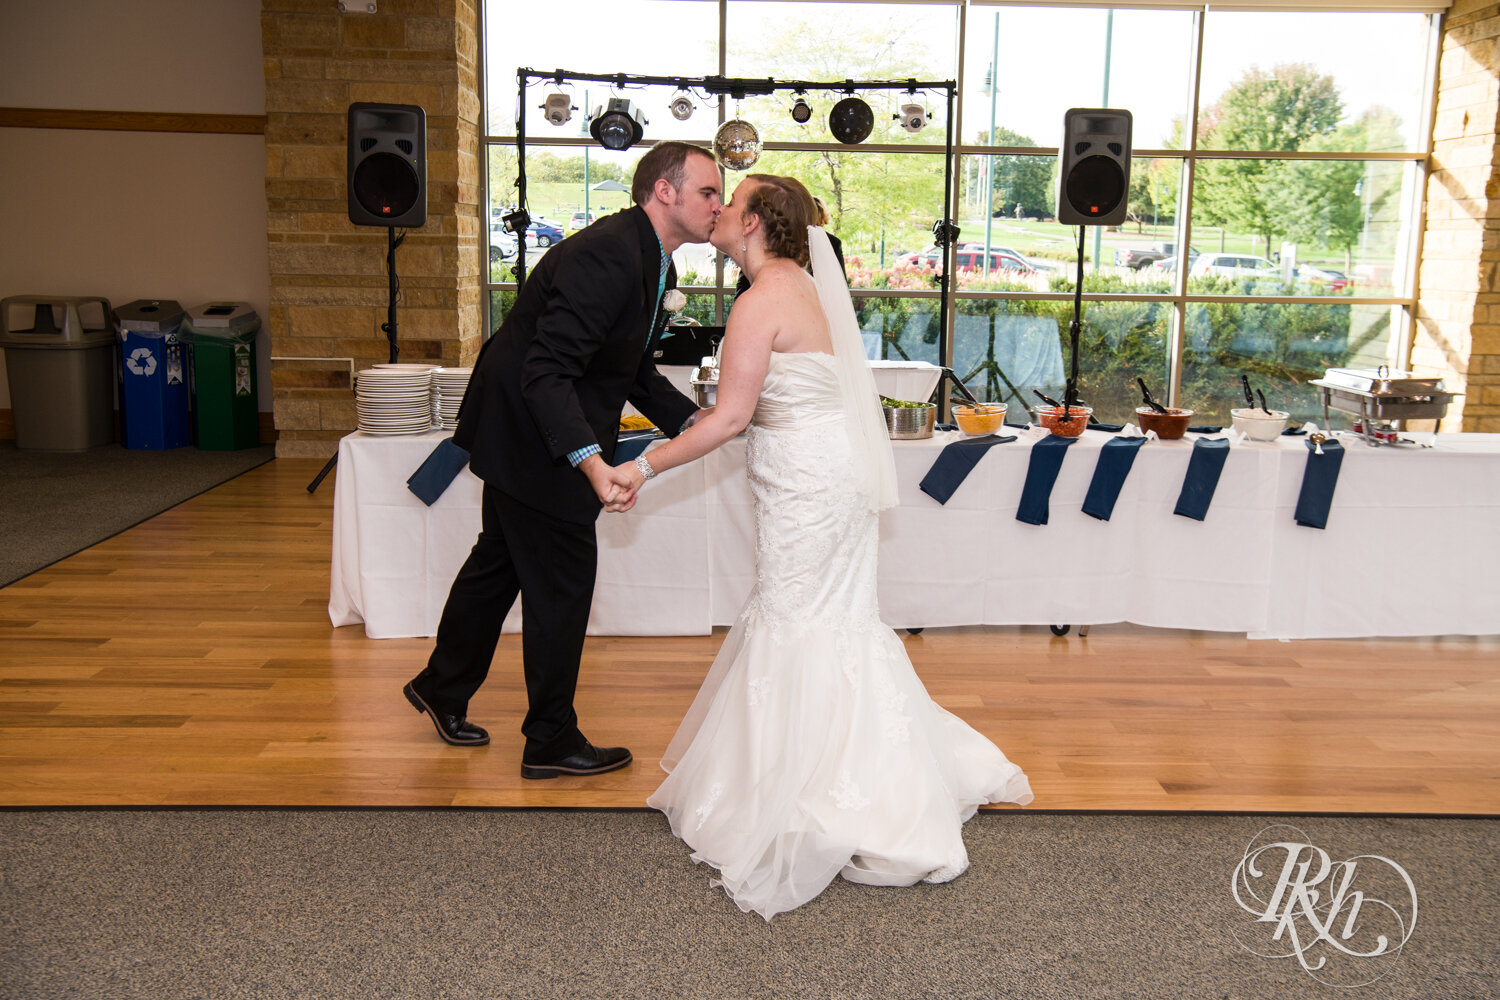 Bride and groom kiss during wedding reception at Eagan Community Center in Eagan, Minnesota.